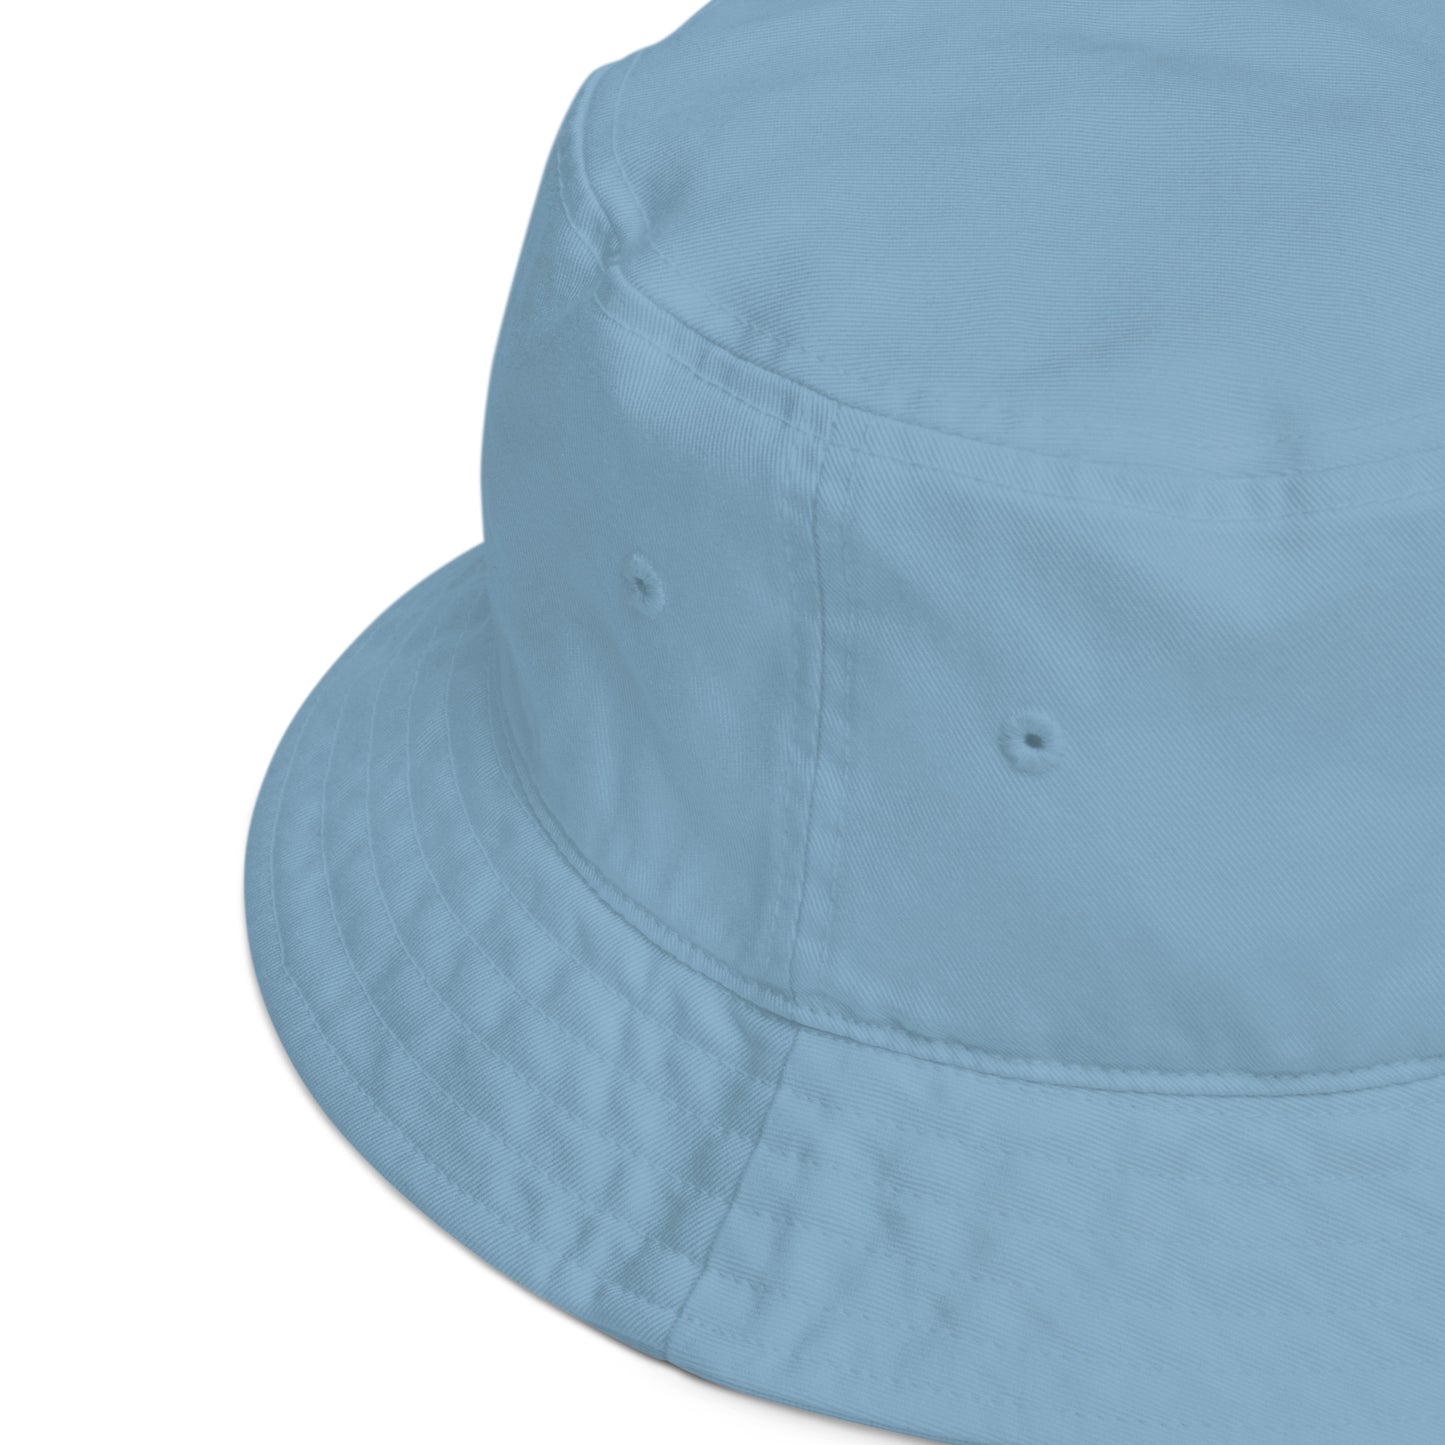 Herrington Lake Nautical Collection Embroidered Organic Bucket Hat